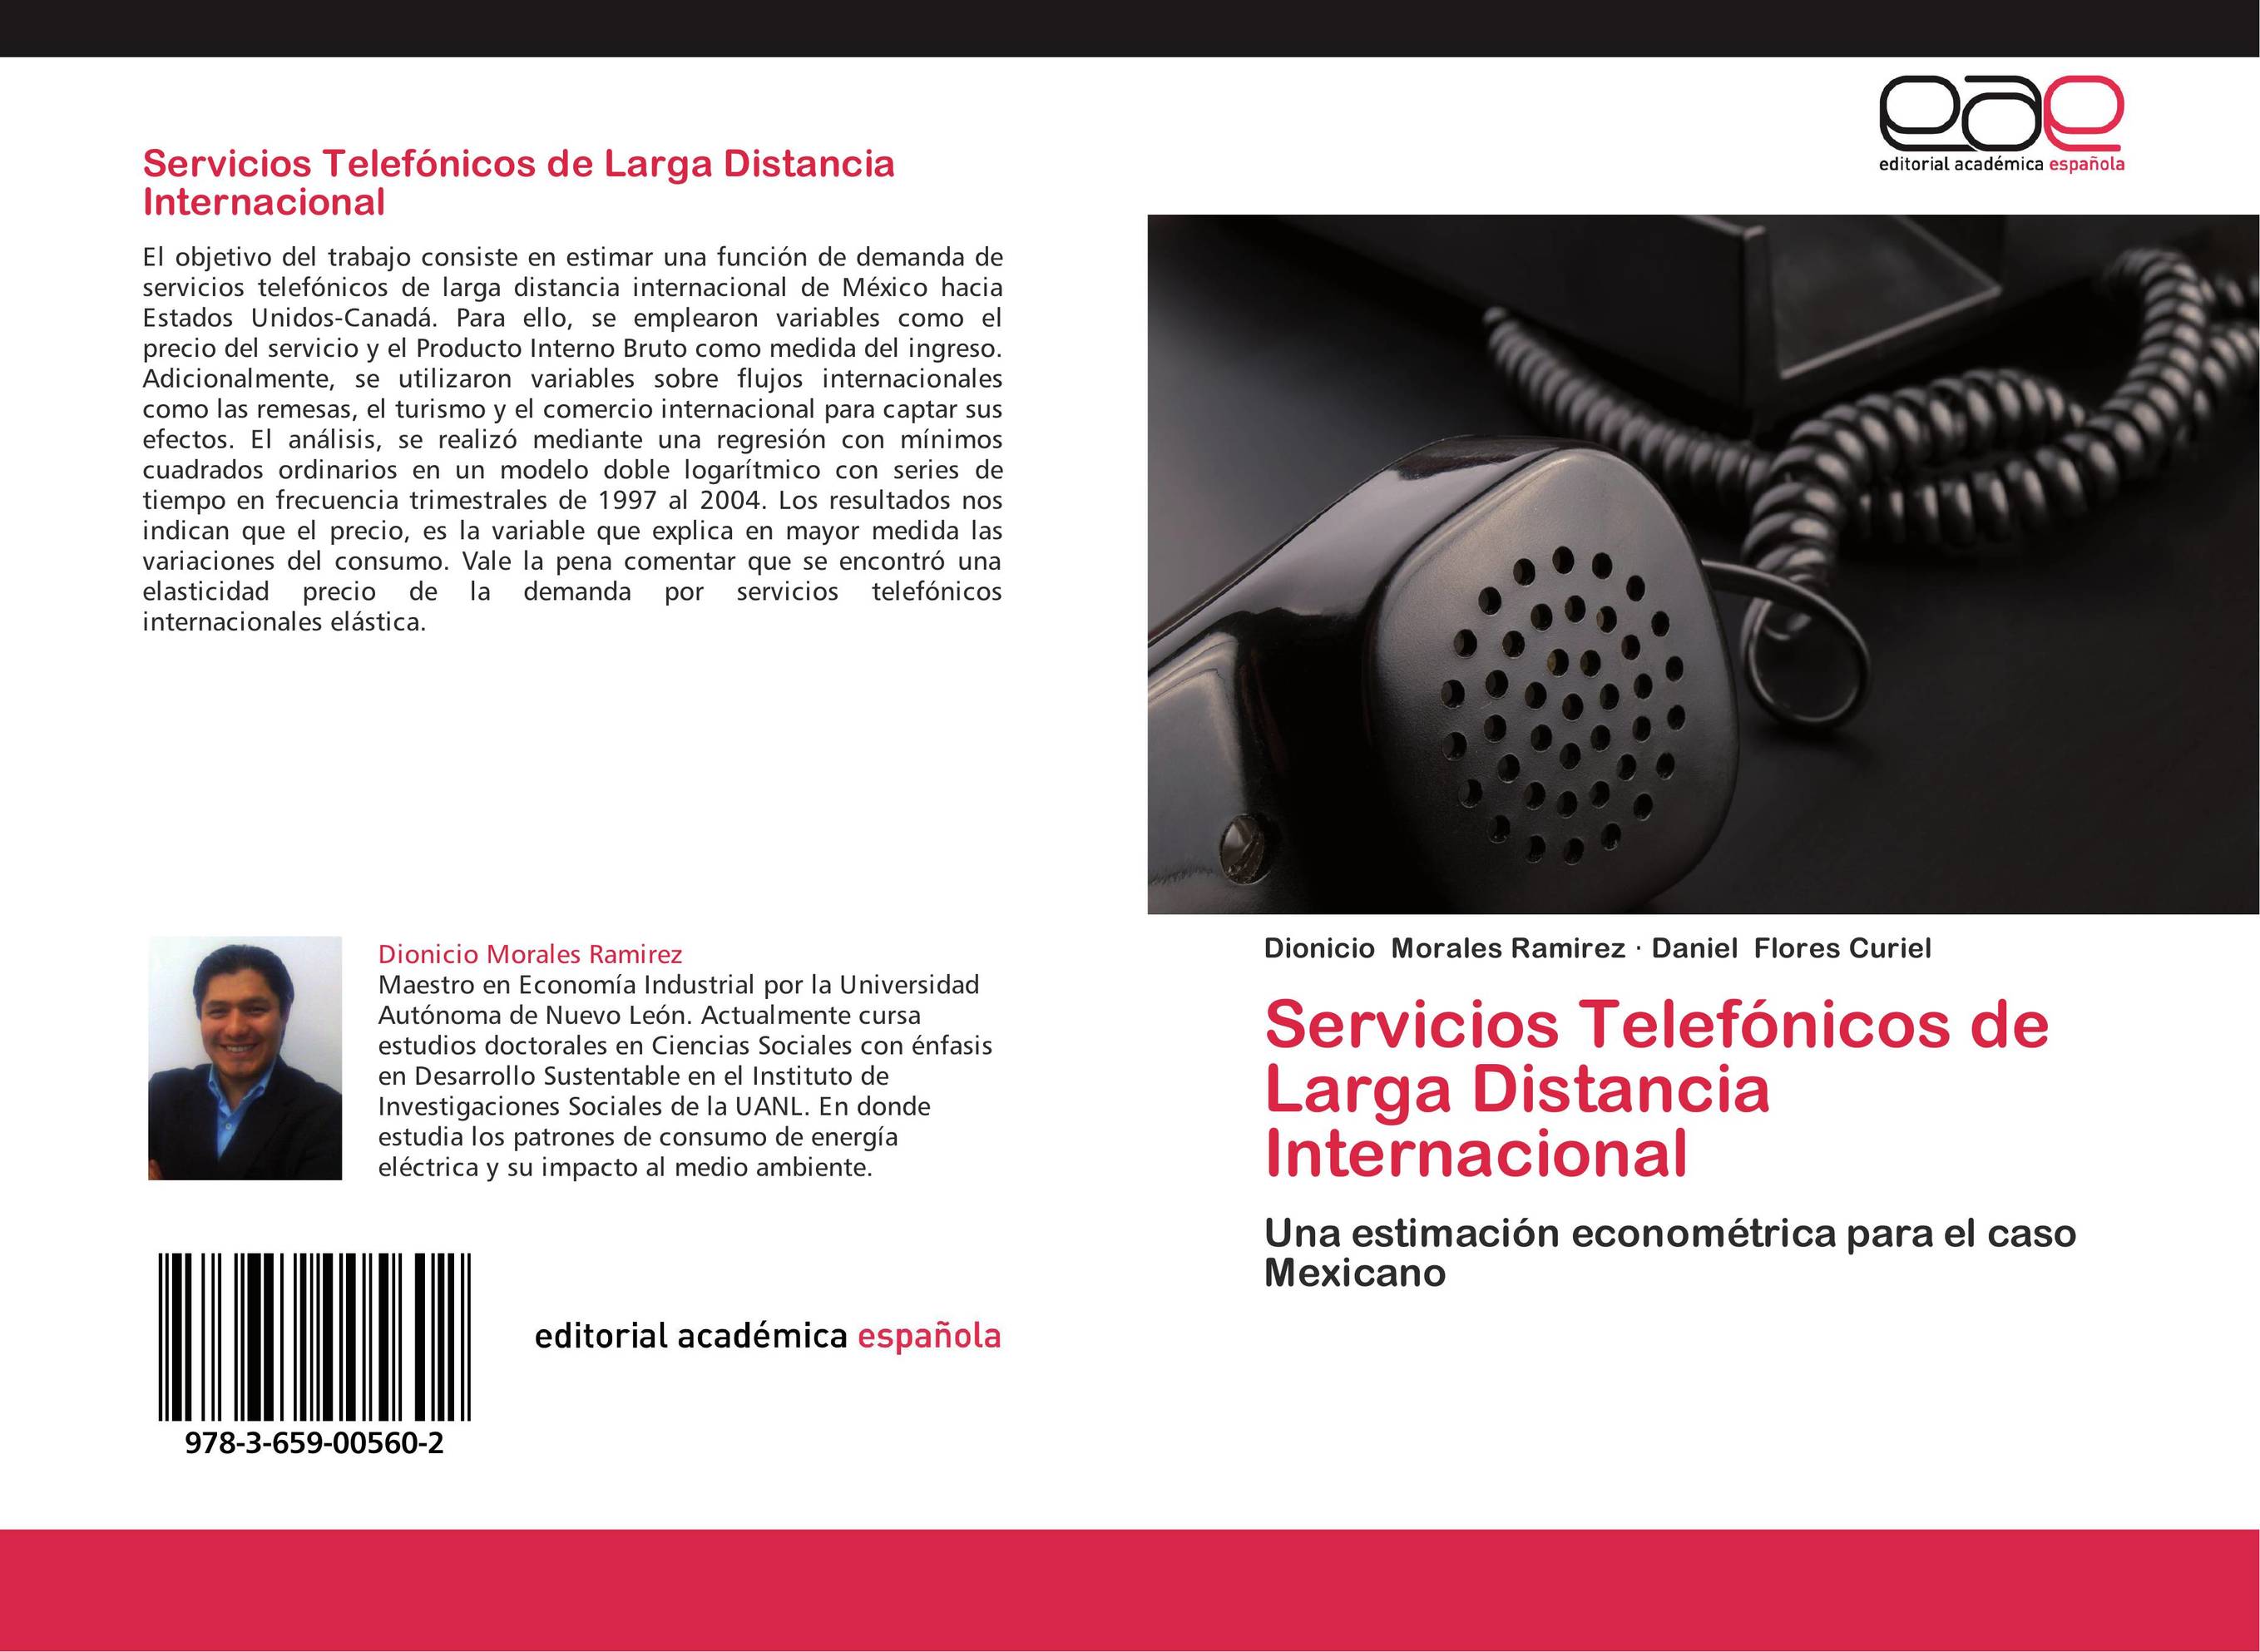 Servicios Telefónicos de Larga Distancia Internacional